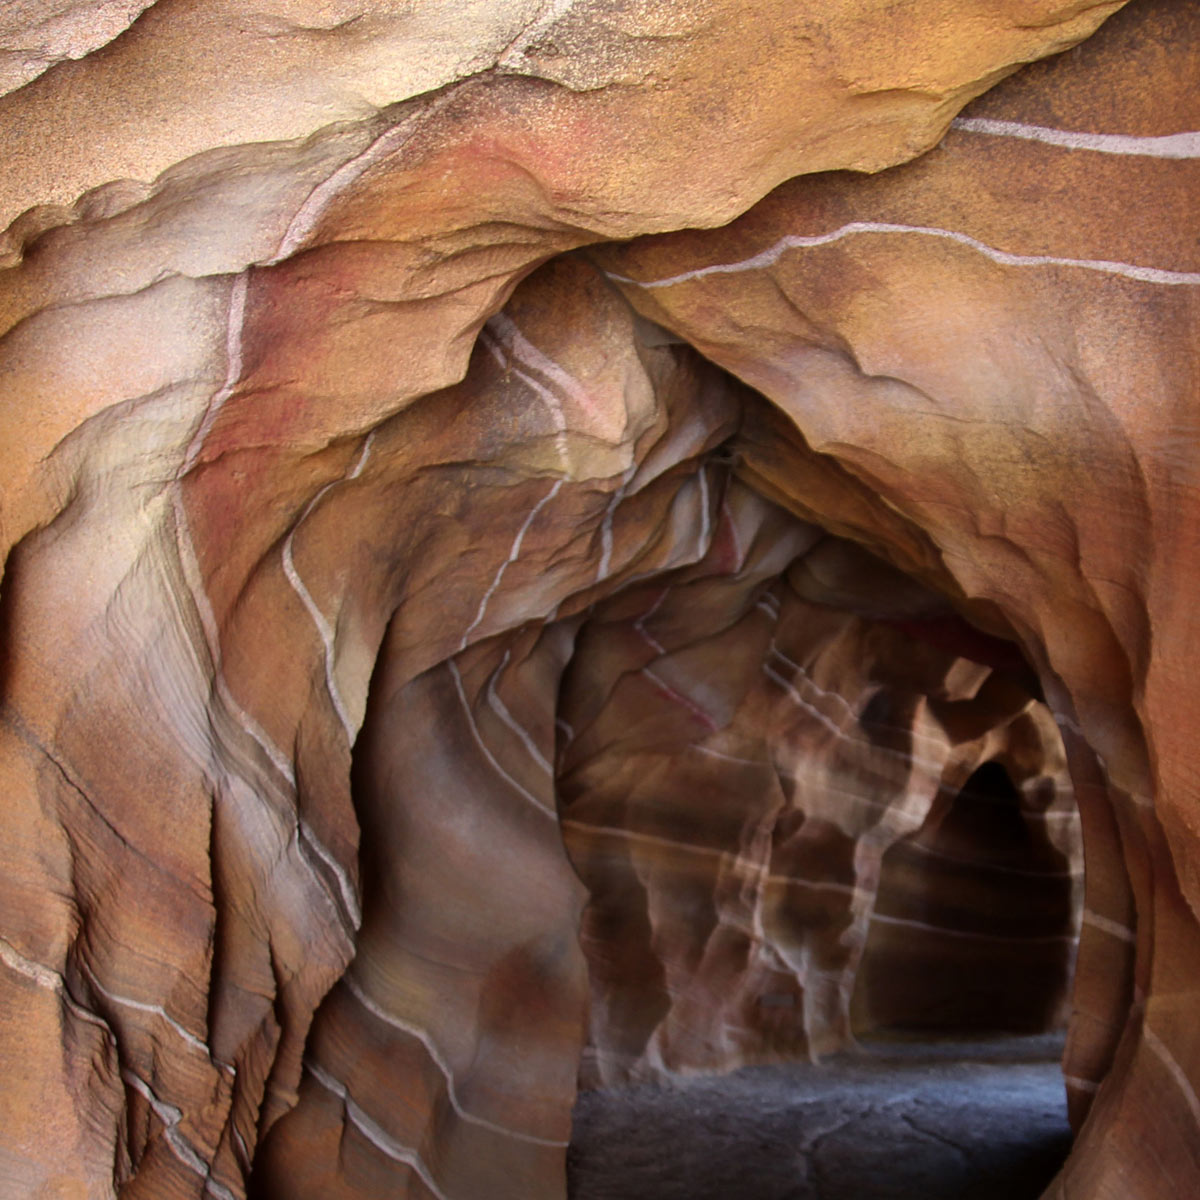 Sandstone Cave